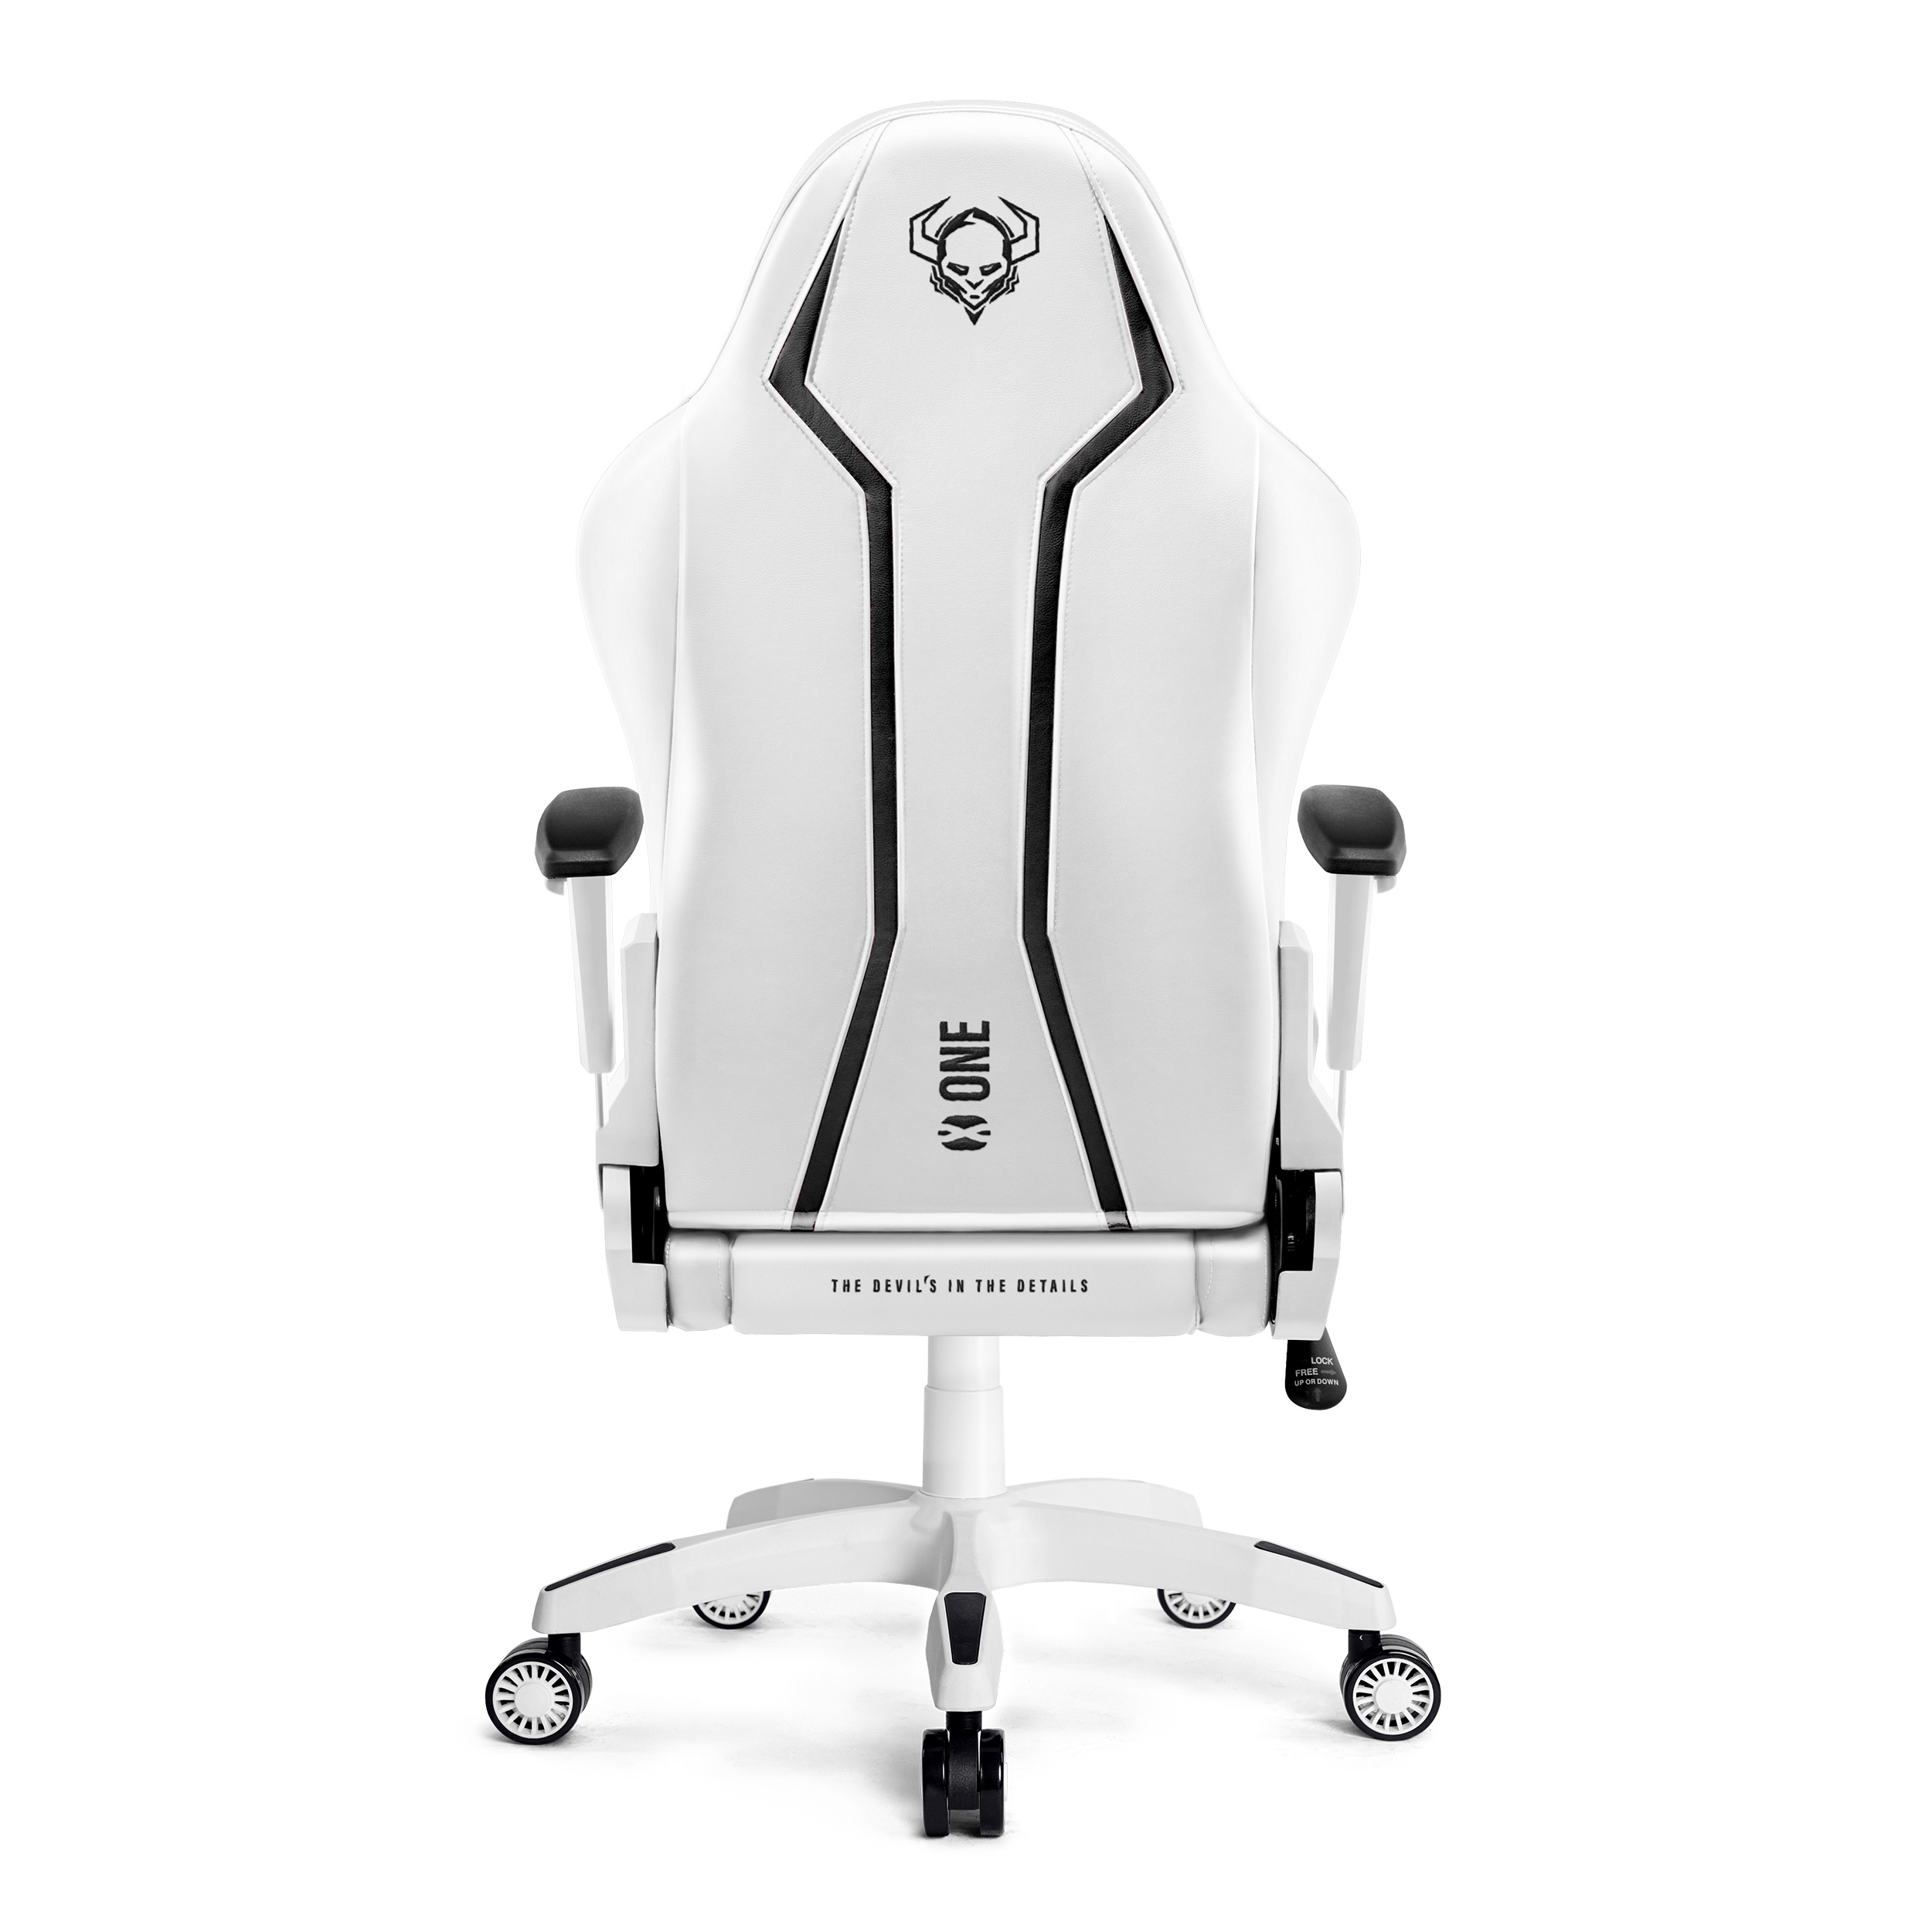 DIABLO CHAIRS GAMING STUHL X-ONE white 2.0 KING Chair, Gaming